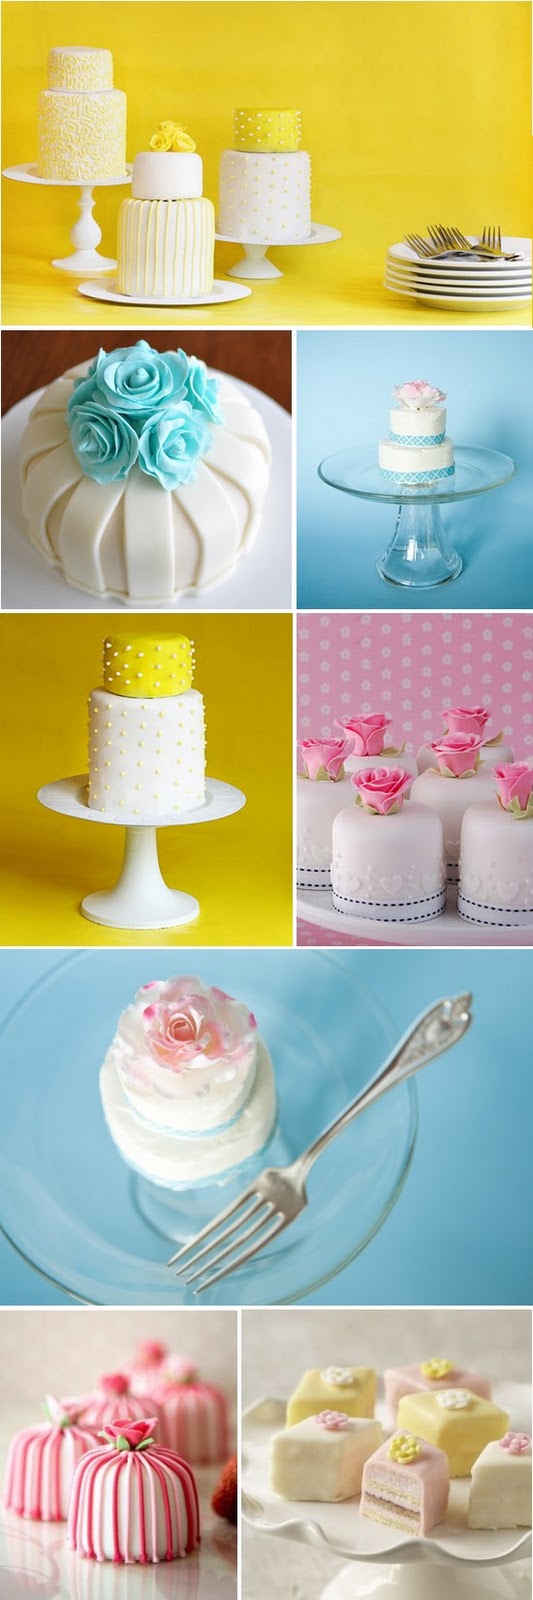 Mini wedding cake collection